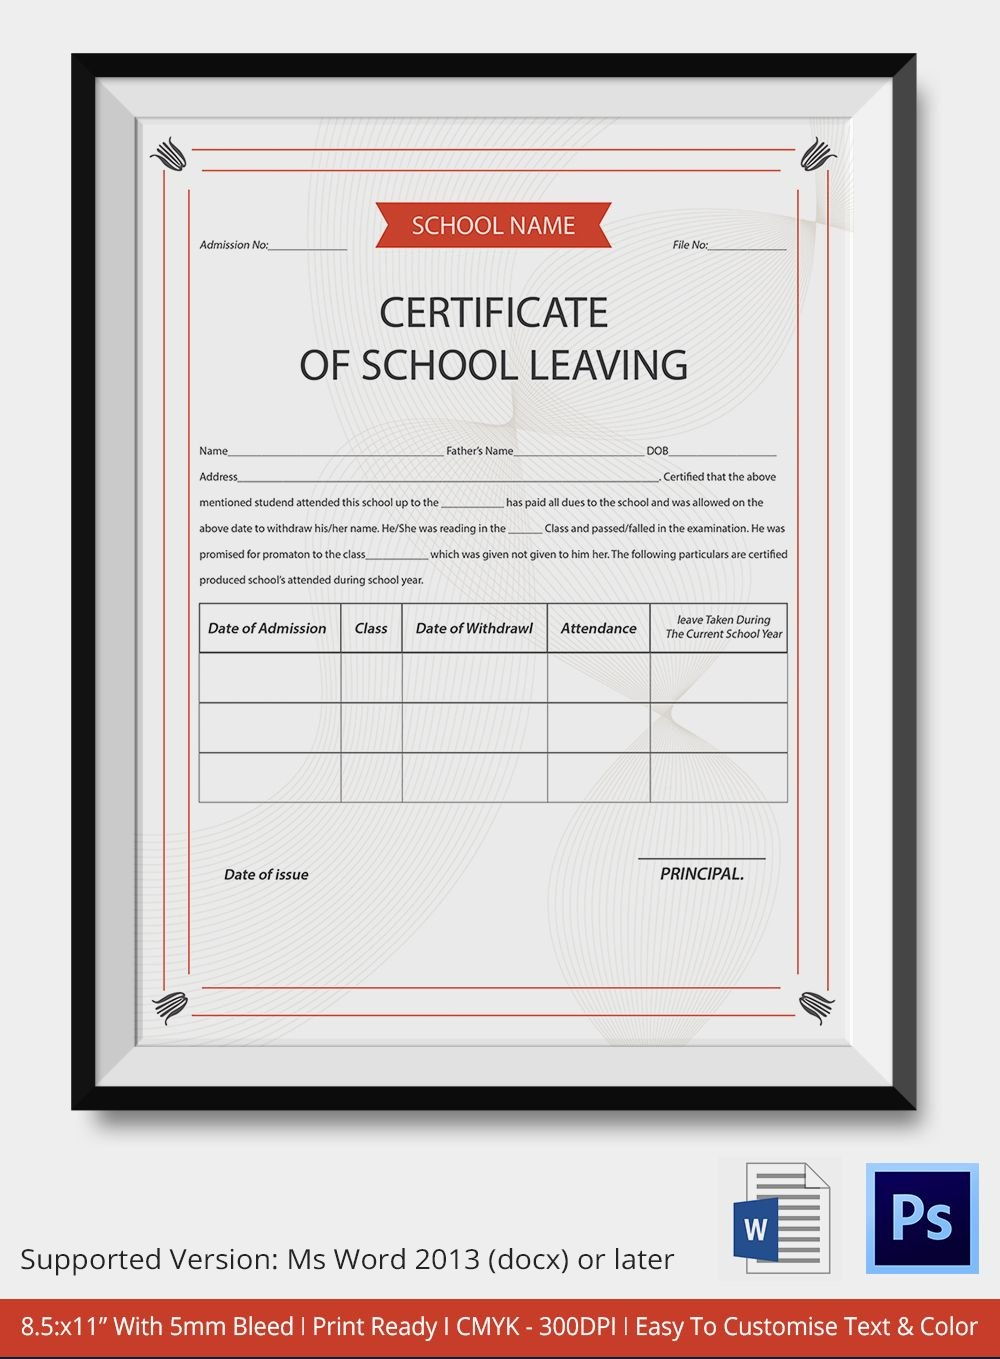 School Leaving Certificate Template  Certificate Templates  School with School Leaving Certificate Template